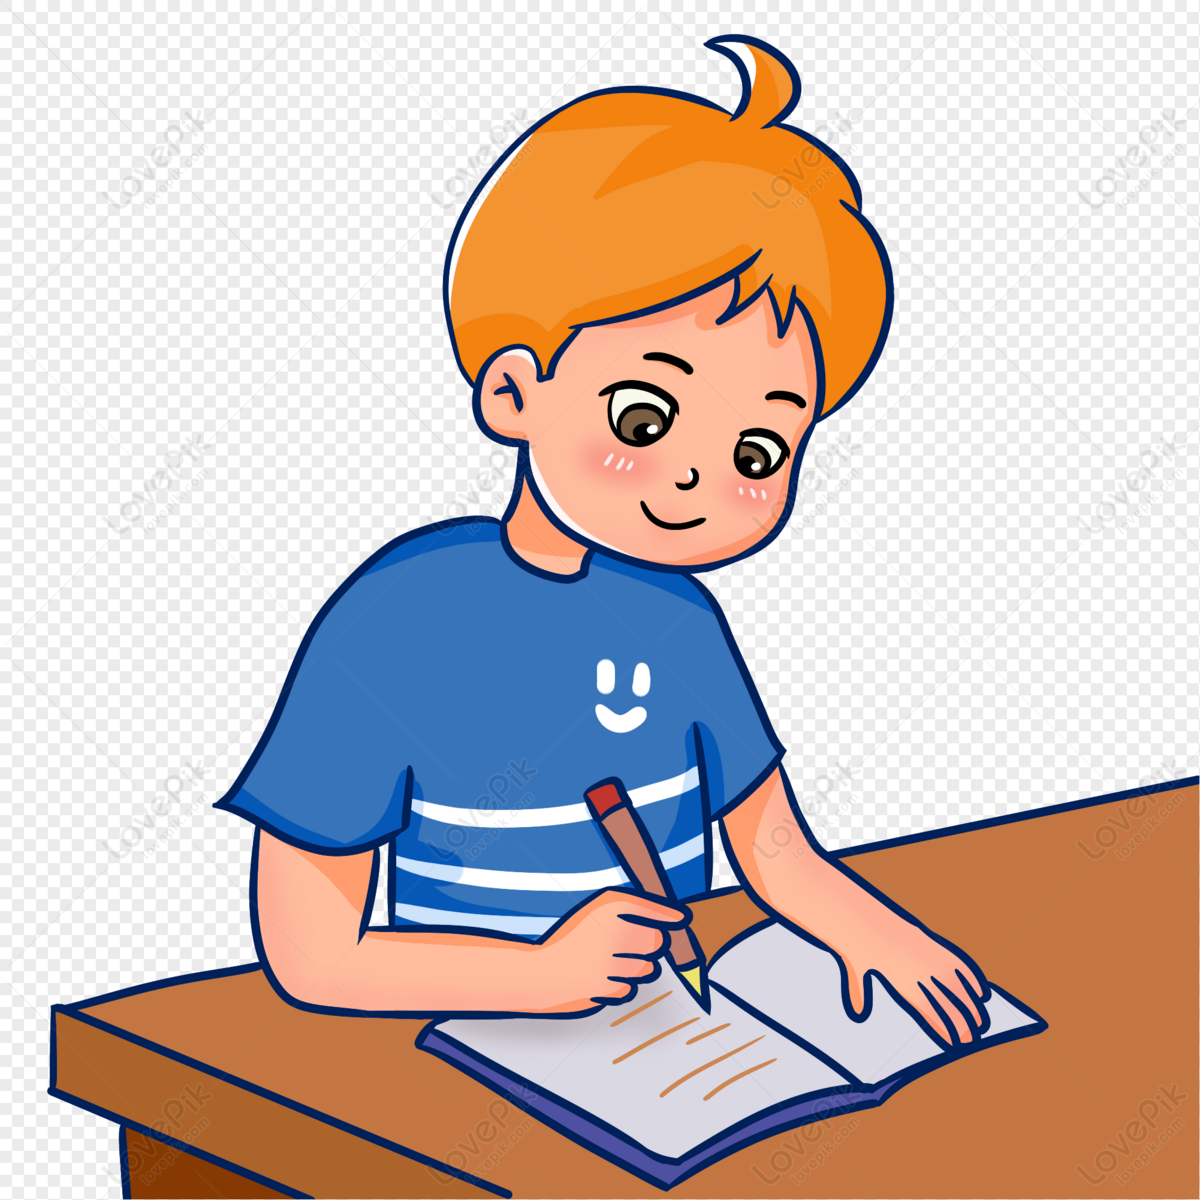 Boy writing homework, writing place, and homework, book png white transparent